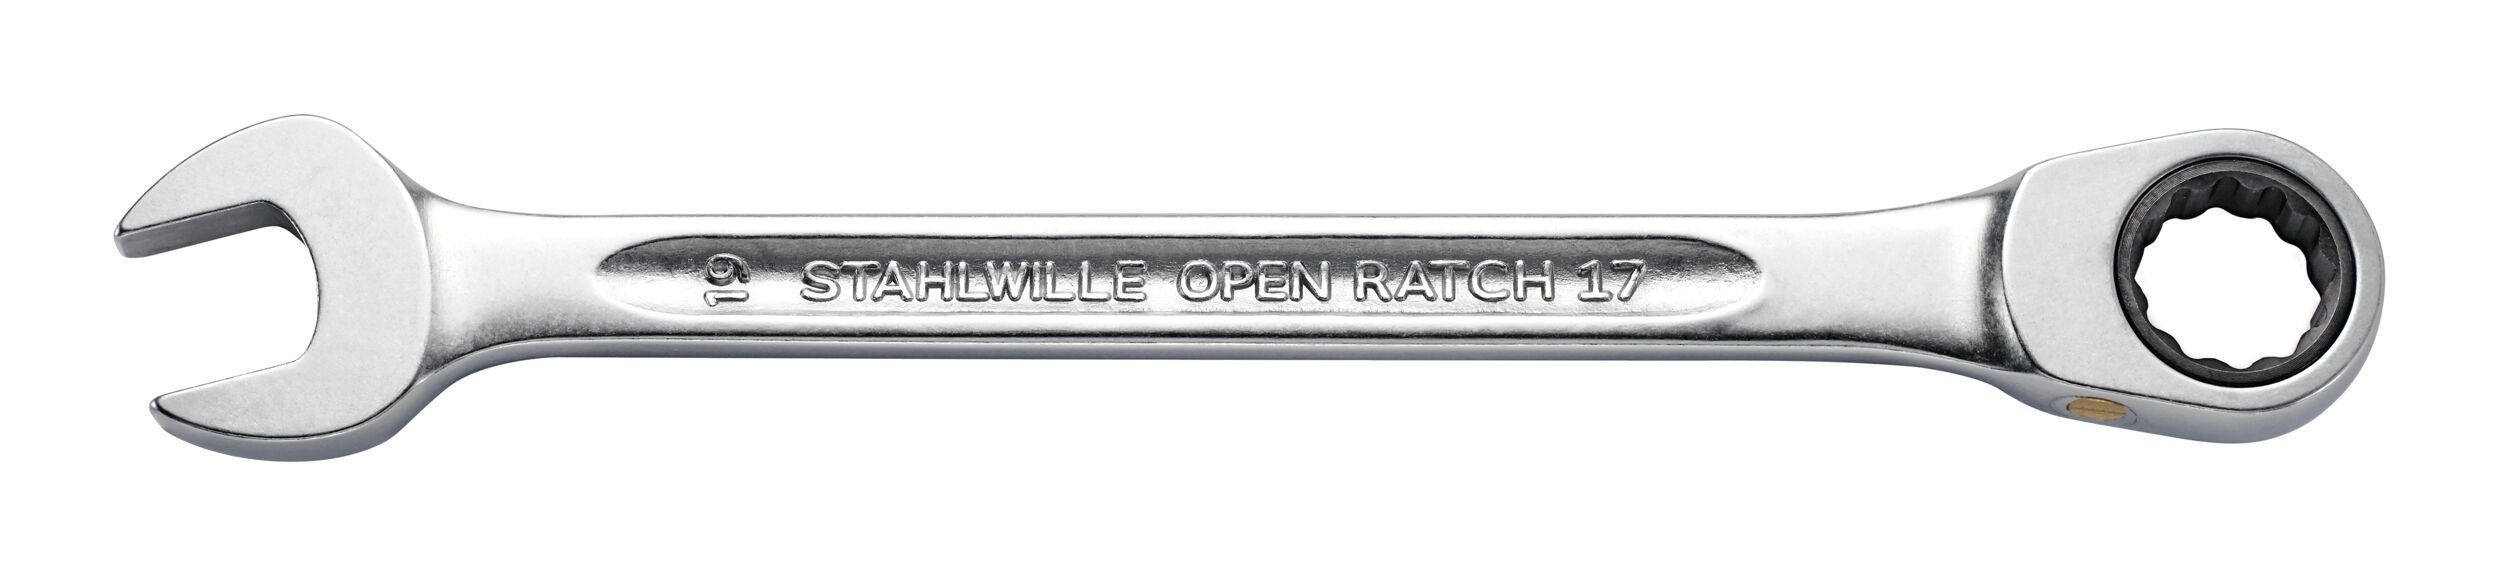 Stahlwille Ratschenringschlüssel, Maul-Ringratschen-Schlüssel gerade 12 mm